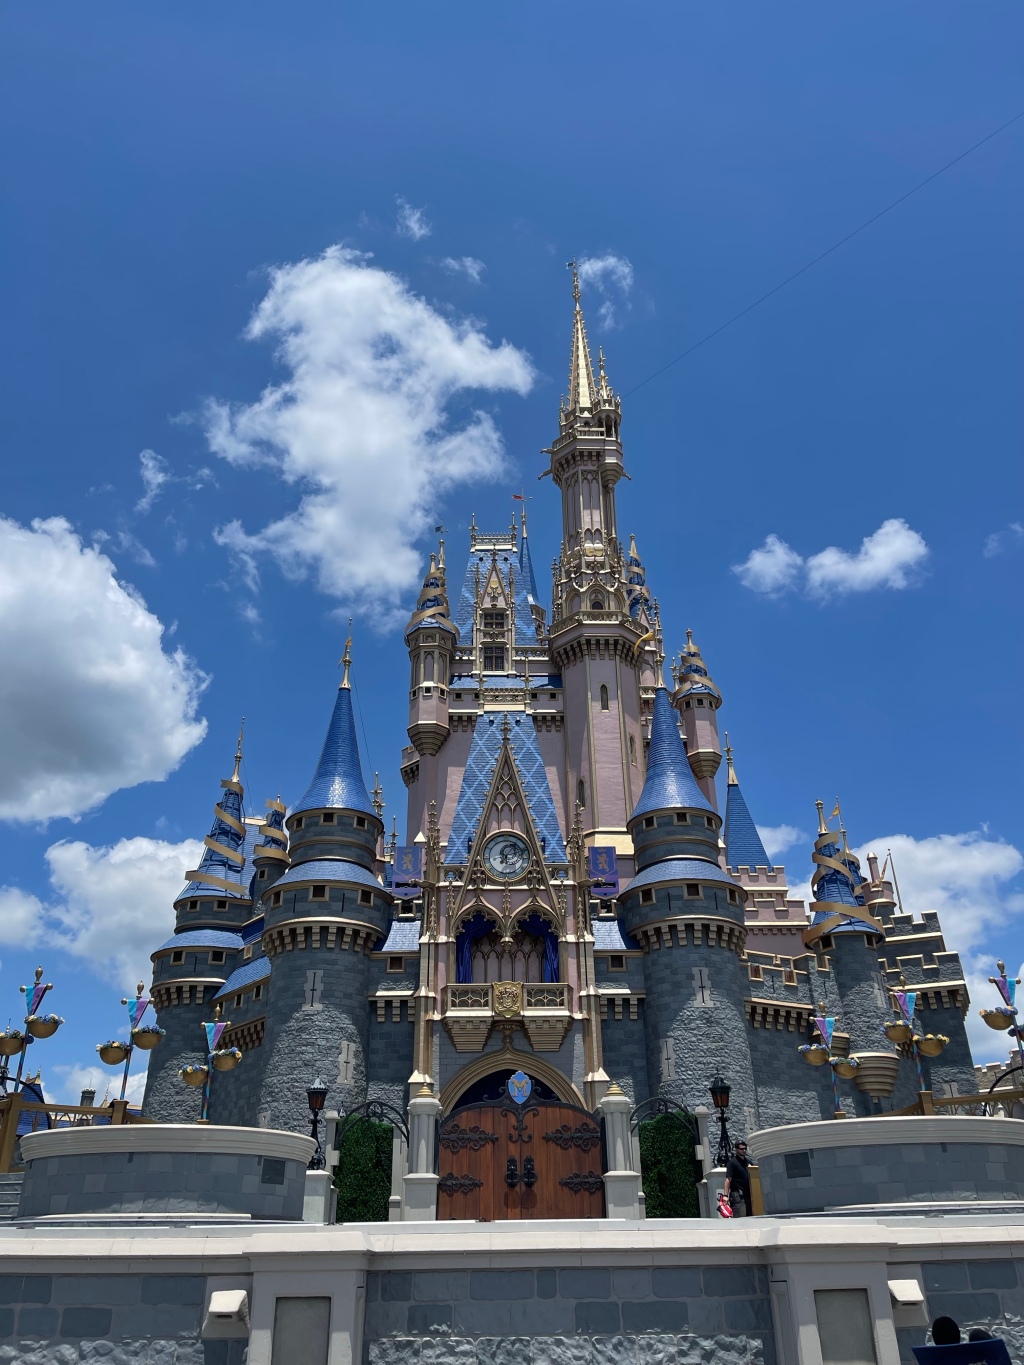 Trip Updates: Our next Walt Disney World and Disneyland Paris holidays